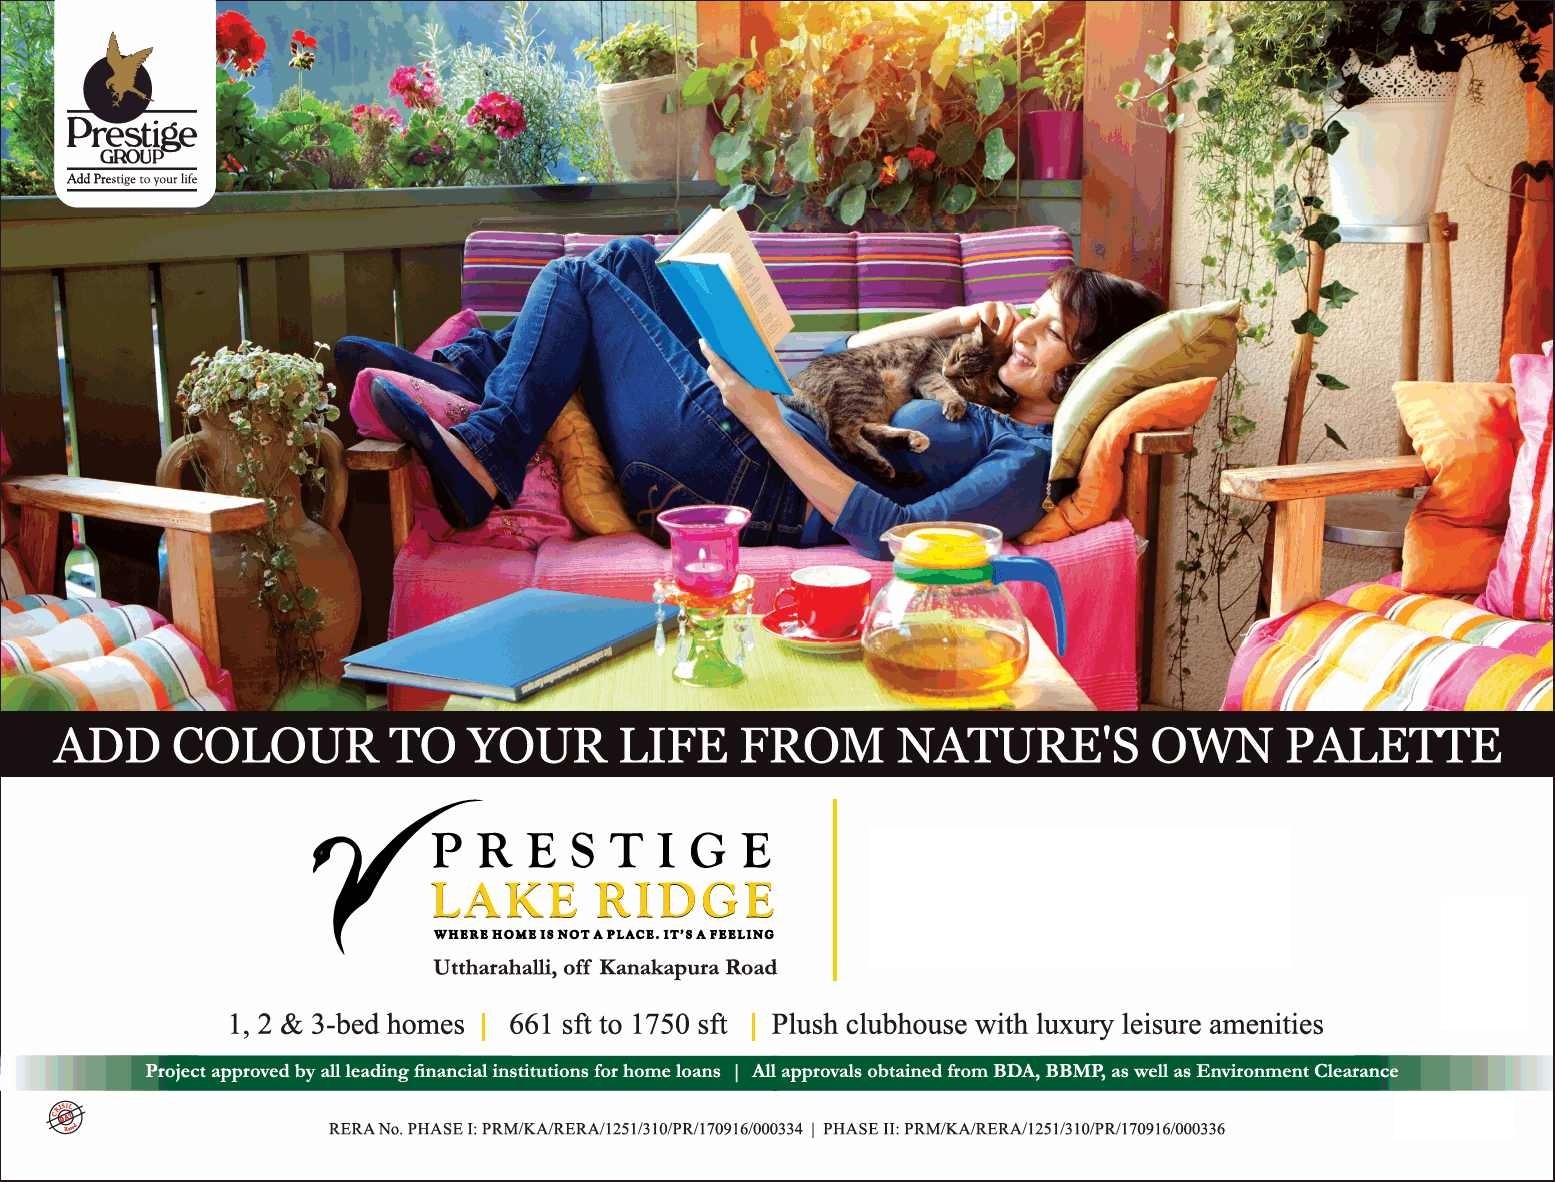 Prestige Lake Ridge launching plush clubhouse with luxury leisure amenities in Bangalore